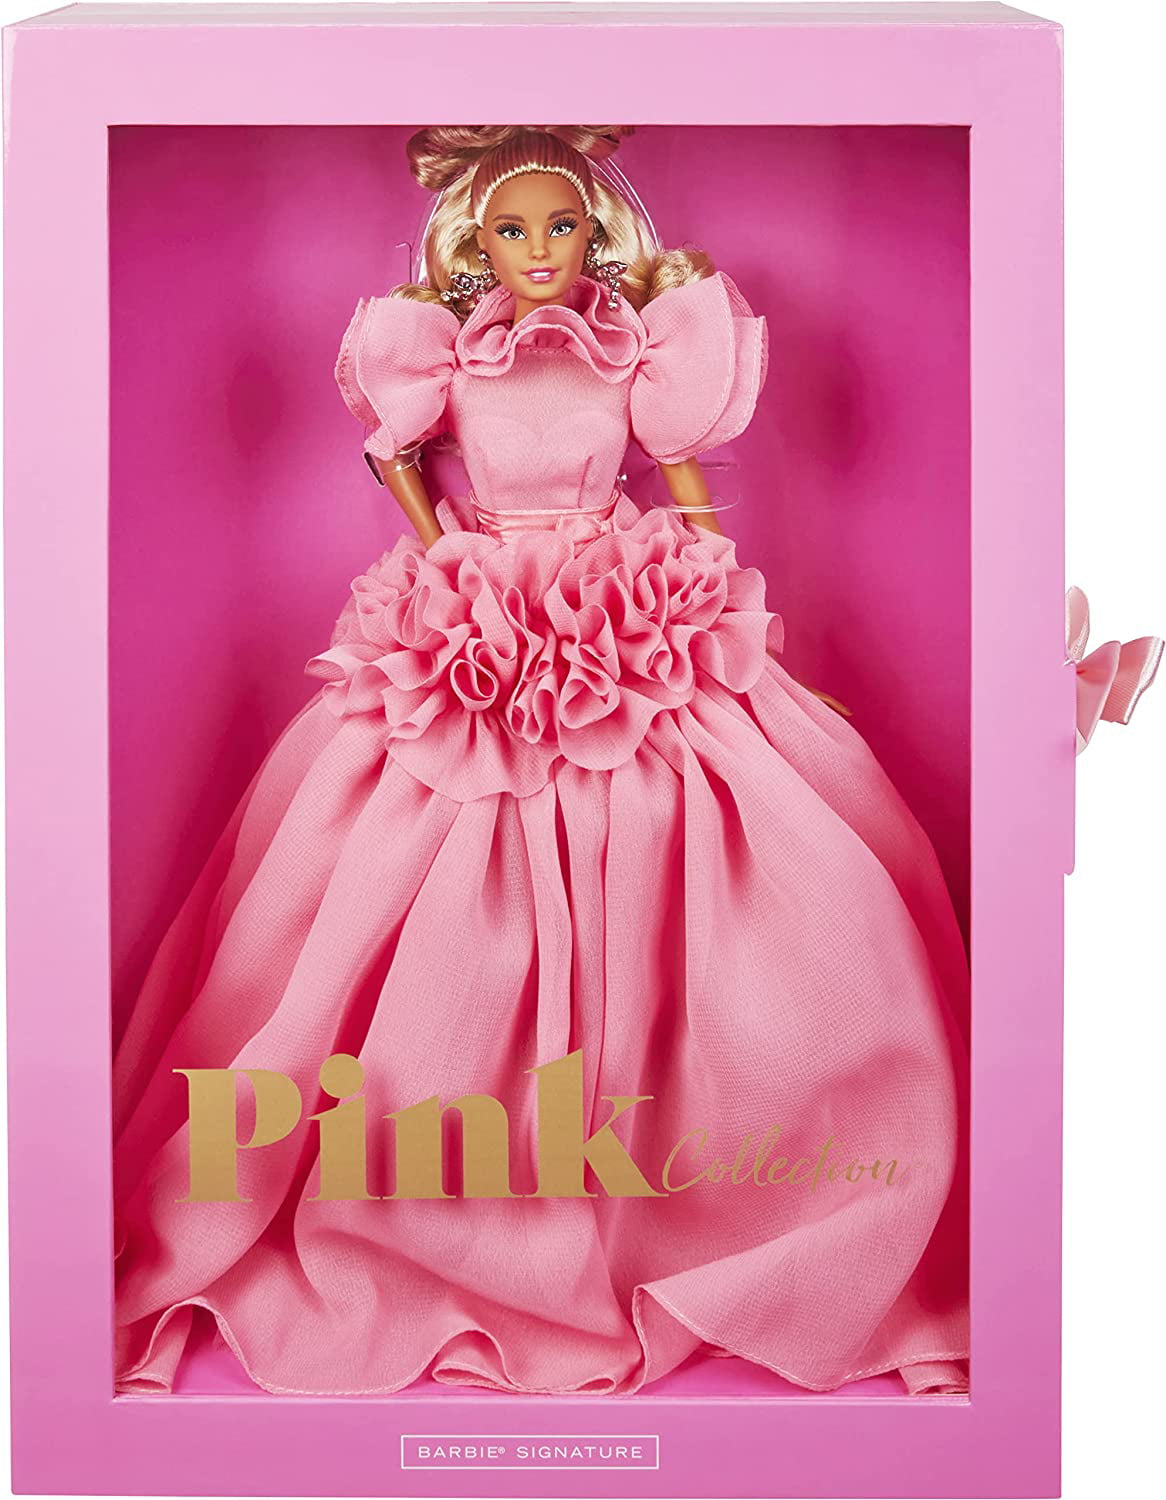 optellen Telemacos Raadplegen Barbie Signature Pink Collection Doll 3rd in Series Limited Edition 2021  Mattel - Walmart.com